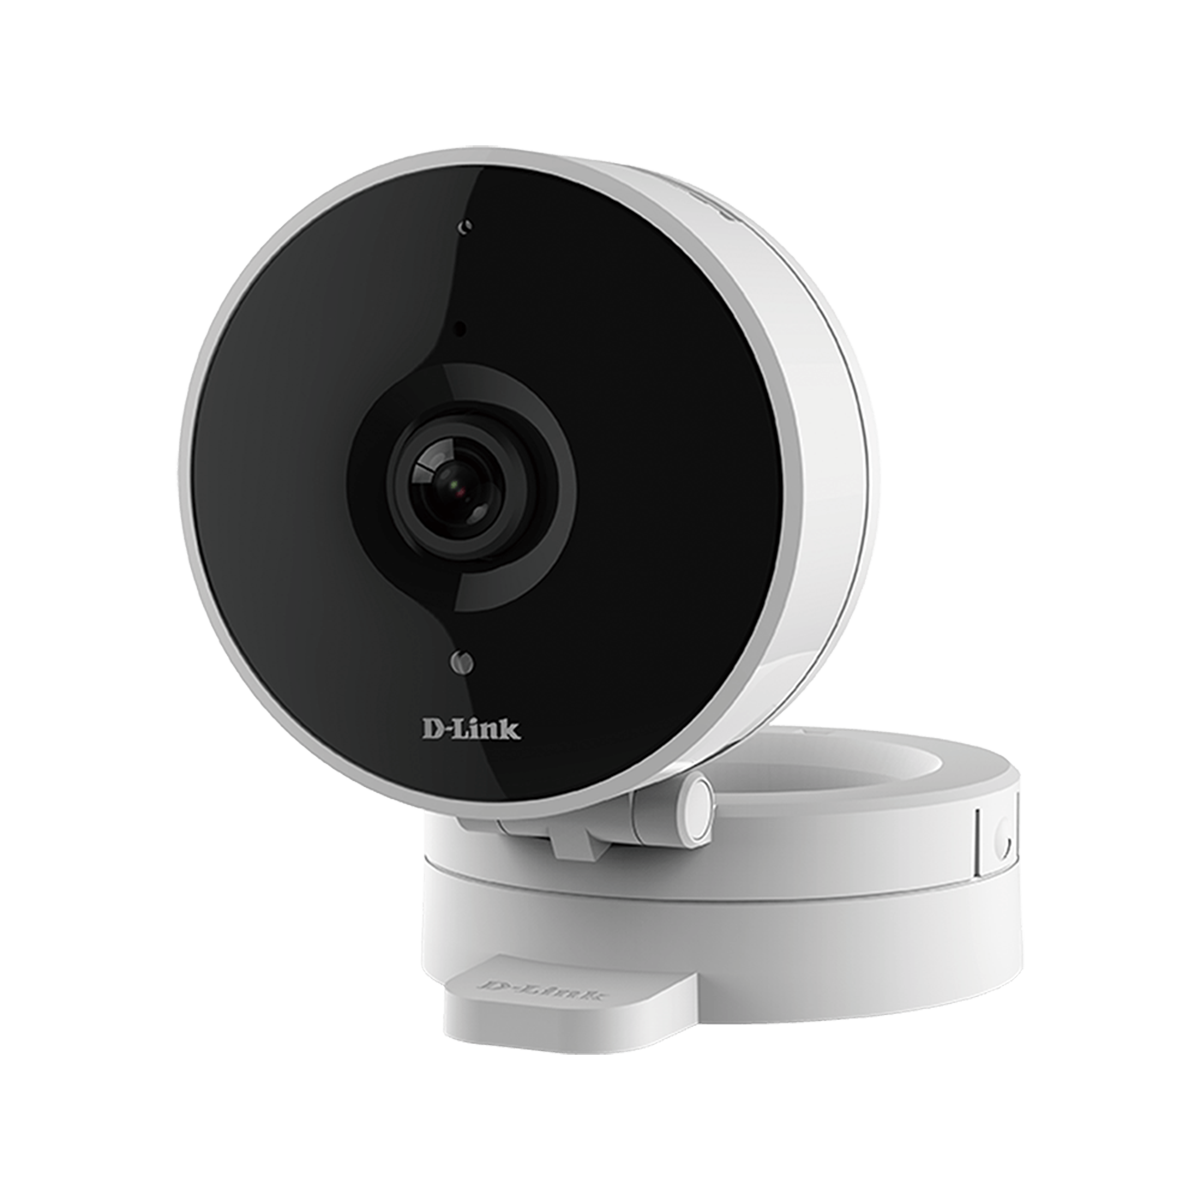 D-Link DCS-8010LH HD Wi-Fi Smart Home Cloud Camera